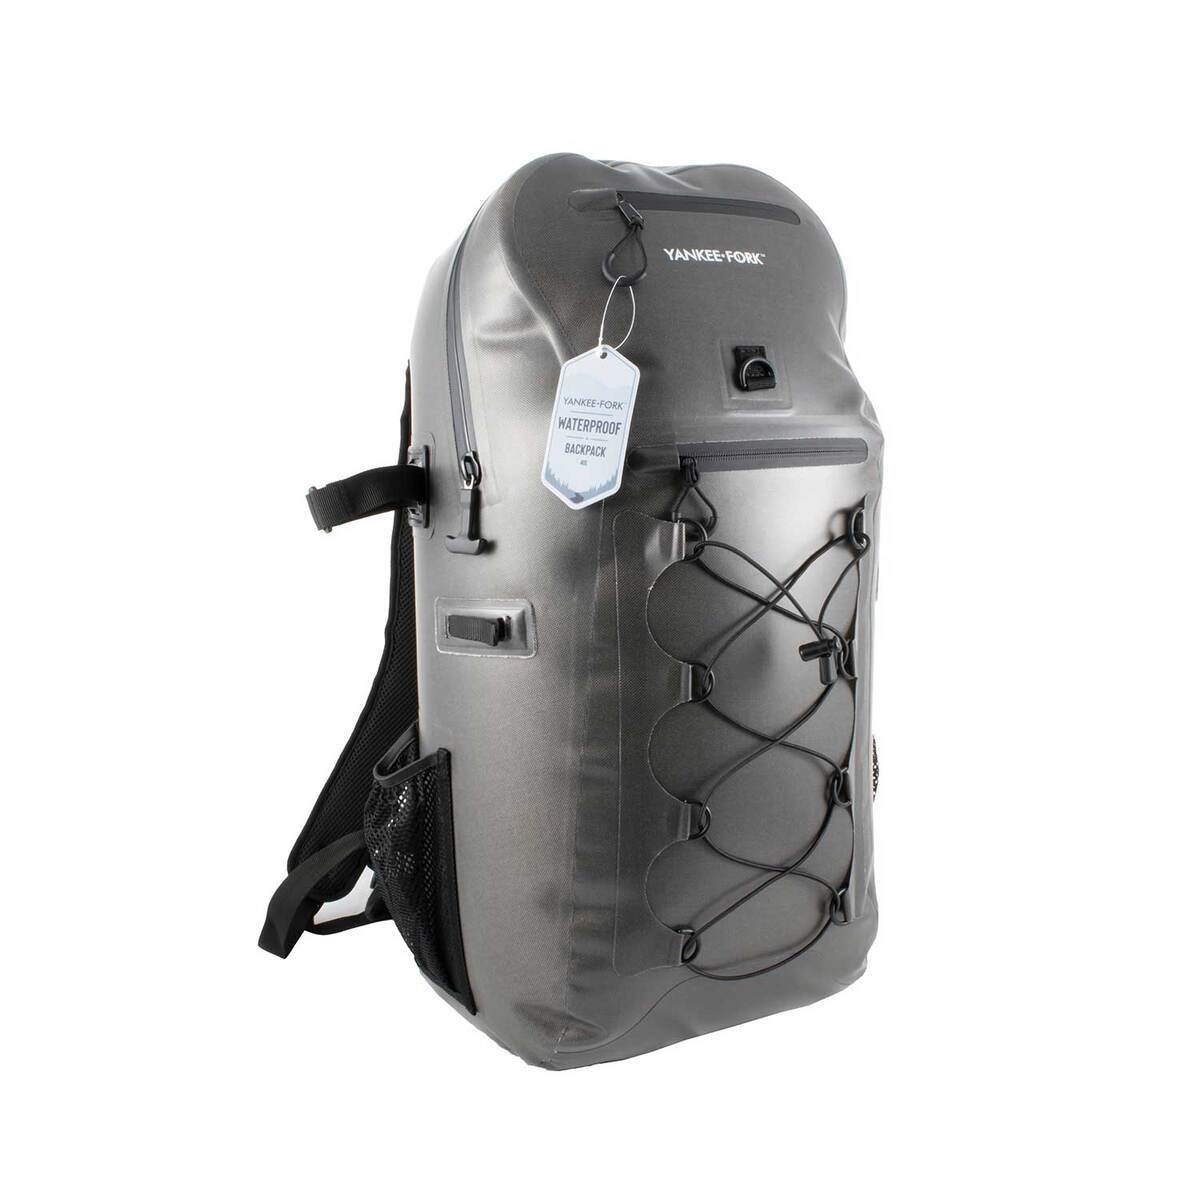 The Daiwa D-Vec Tactical Backpack provides comprehensive storage